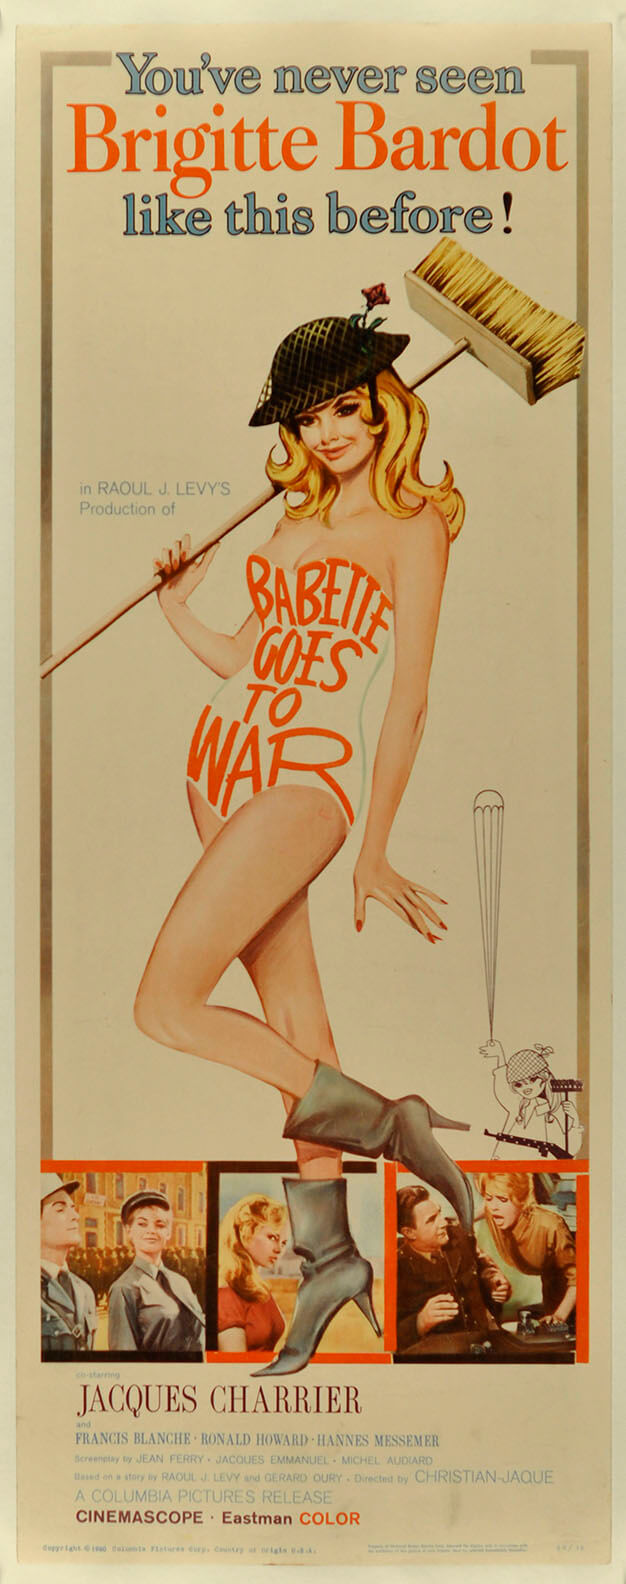 Babette Goes to War